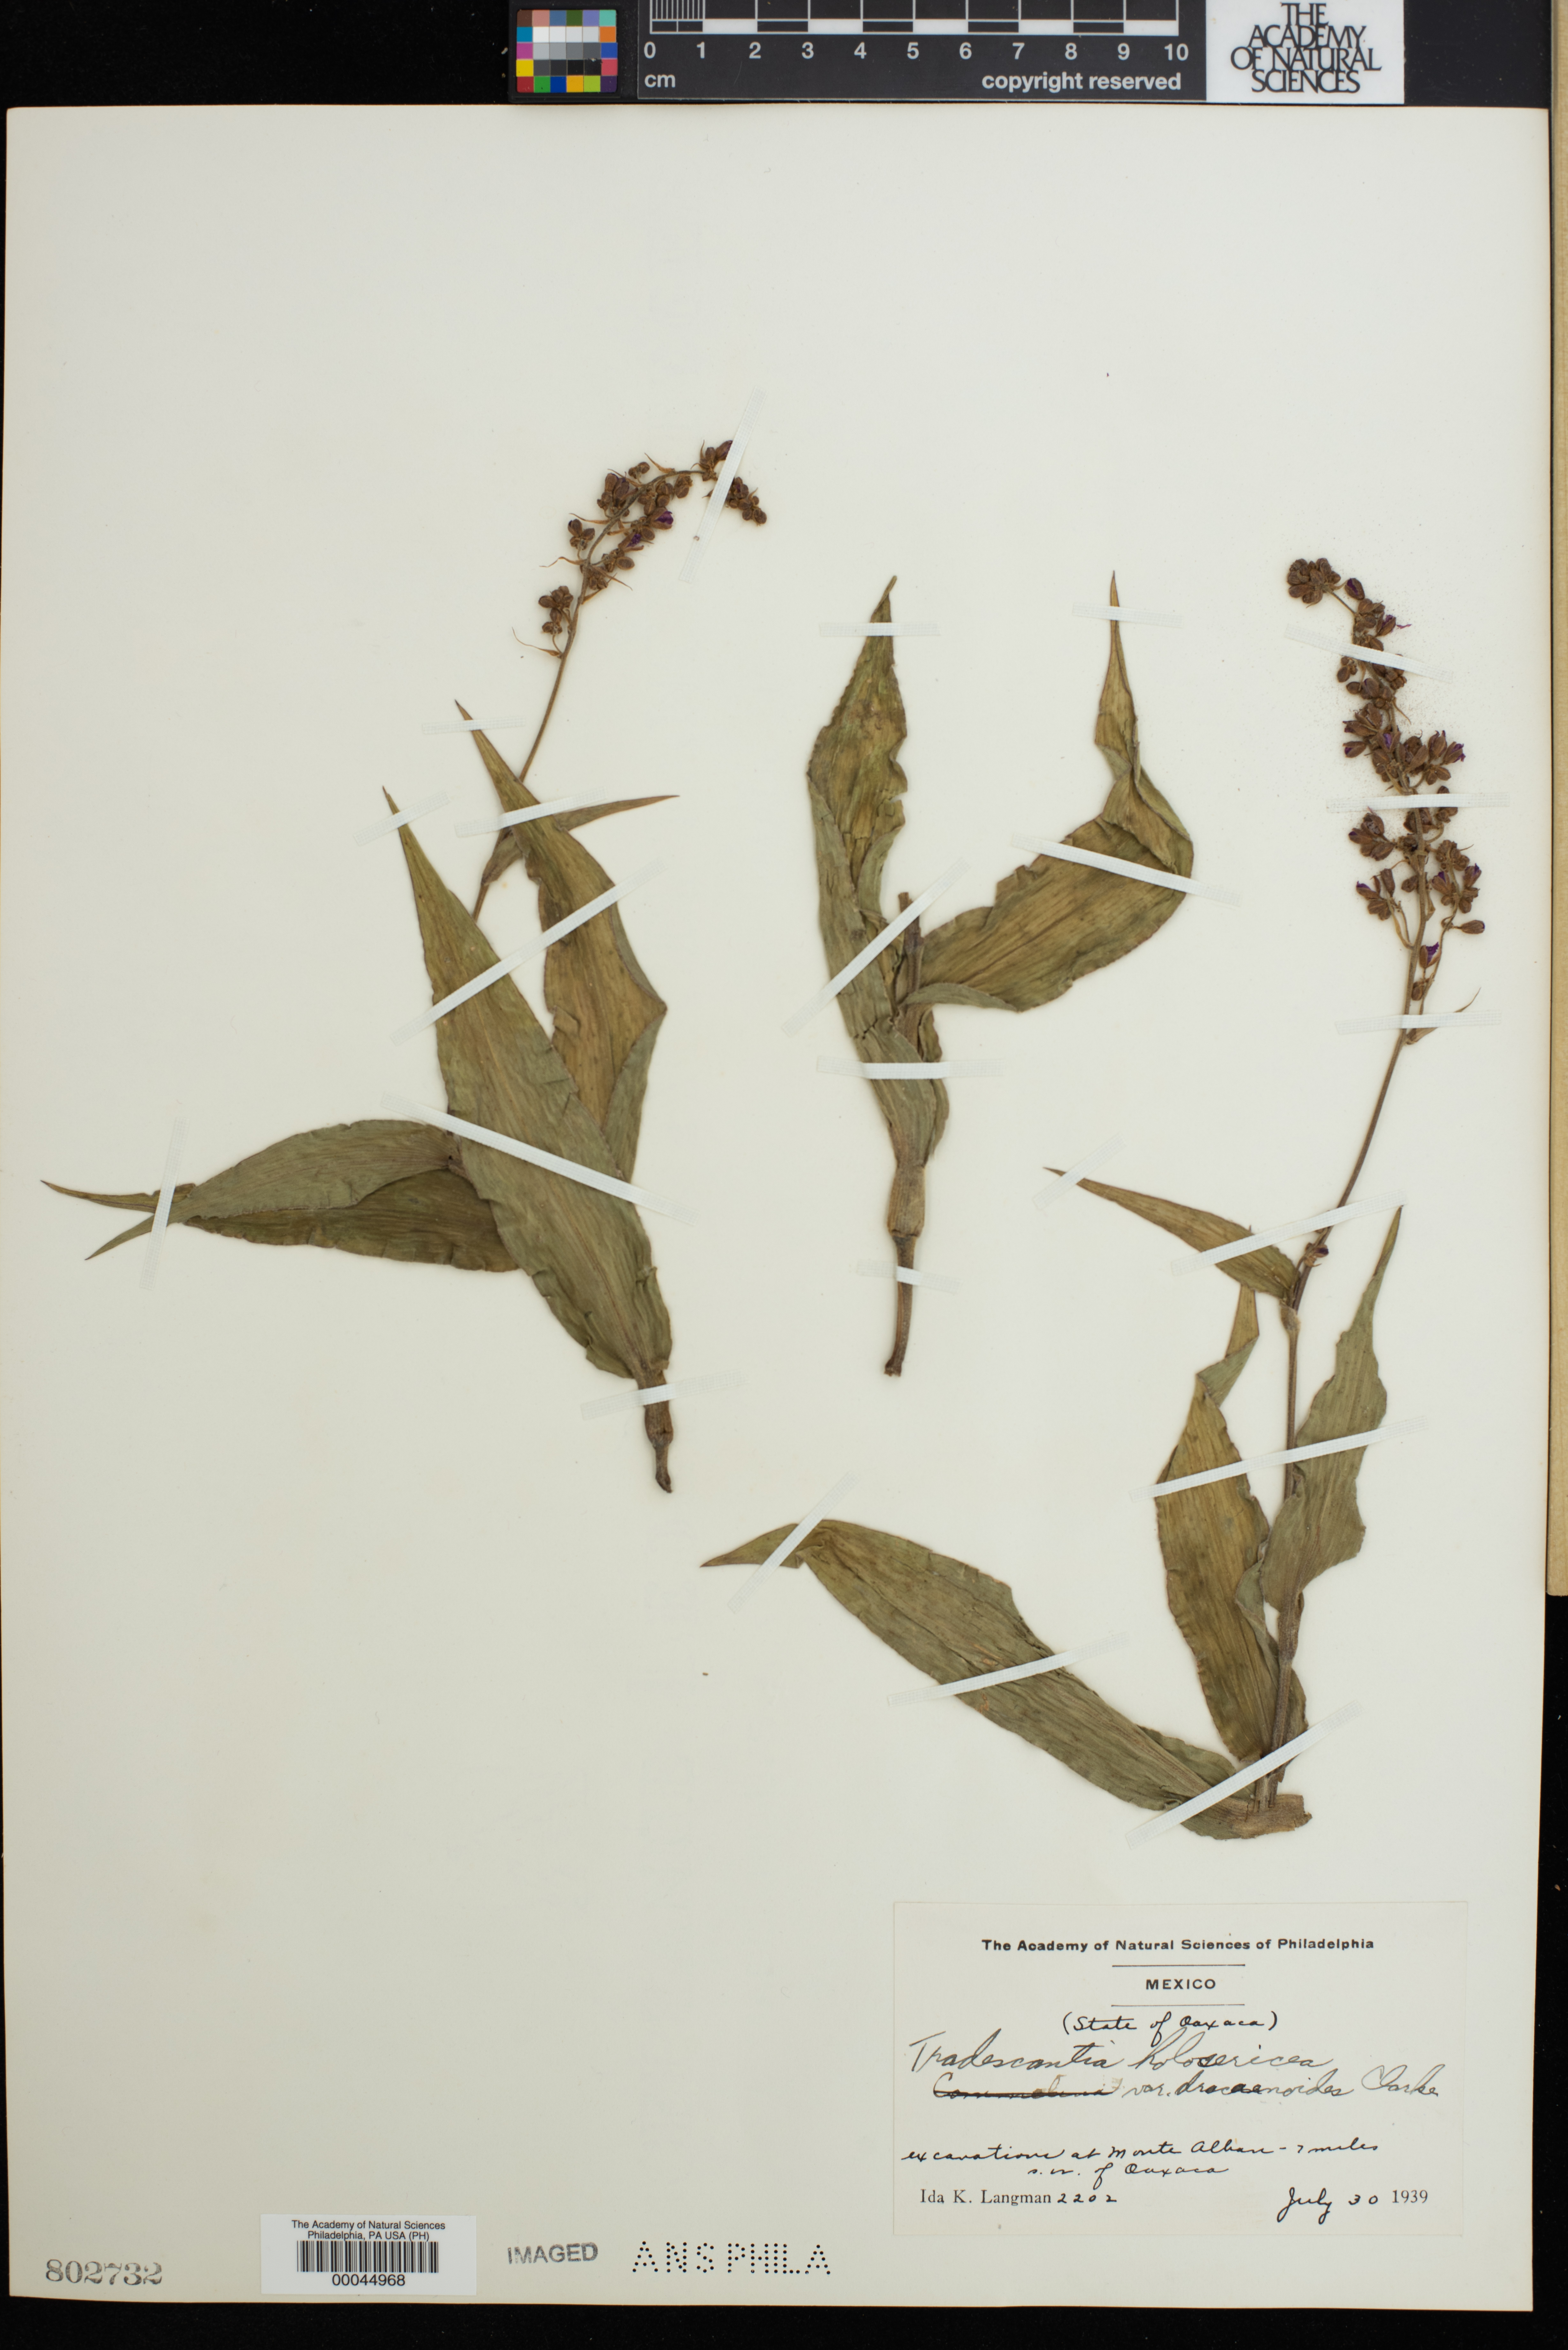 Thyrsanthemum macrophyllum image